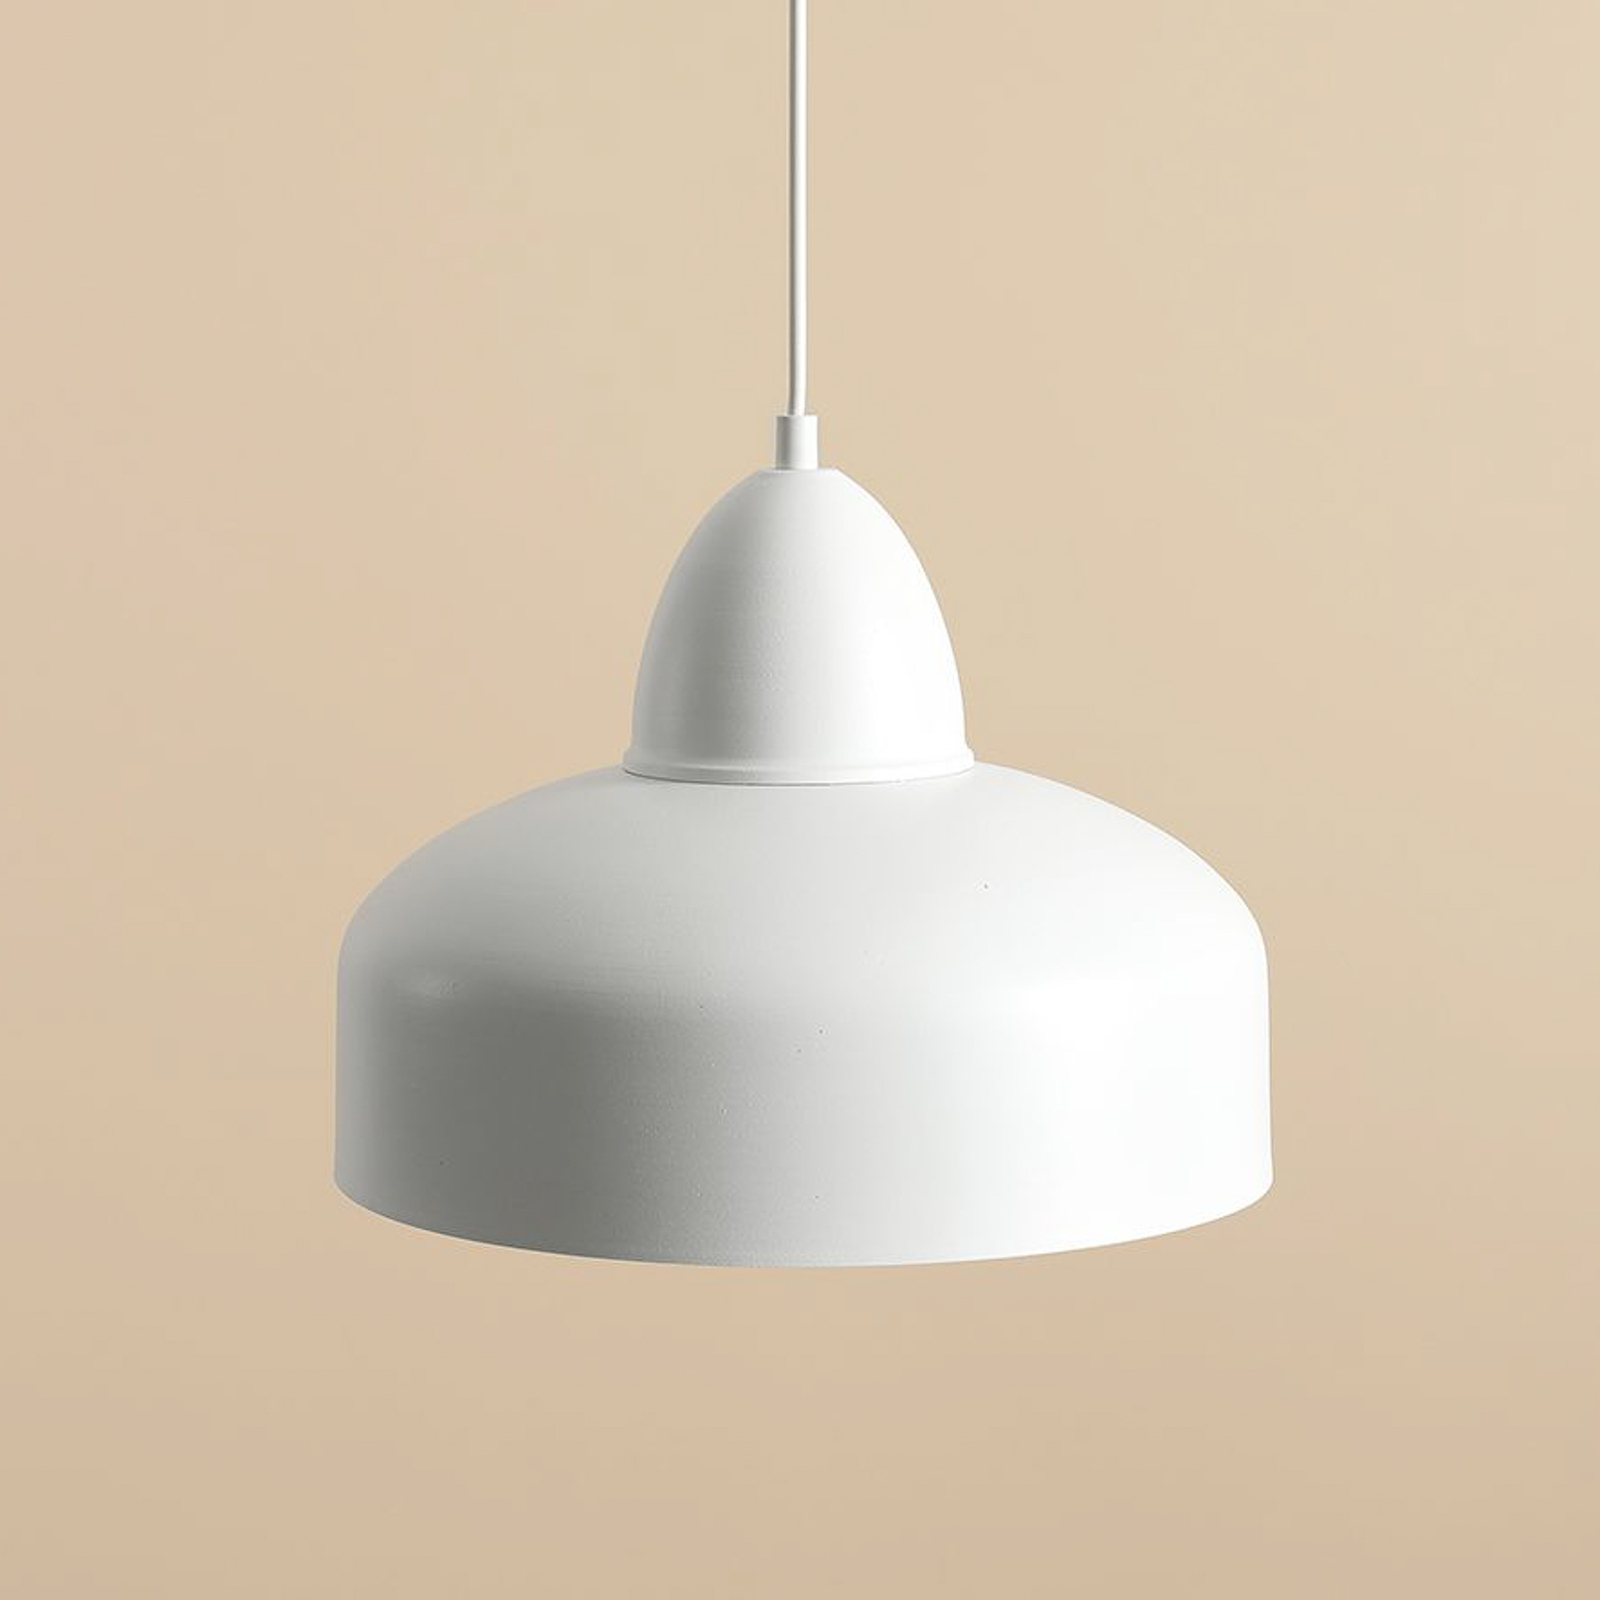 Hanglamp Mille, 1-lamp, wit